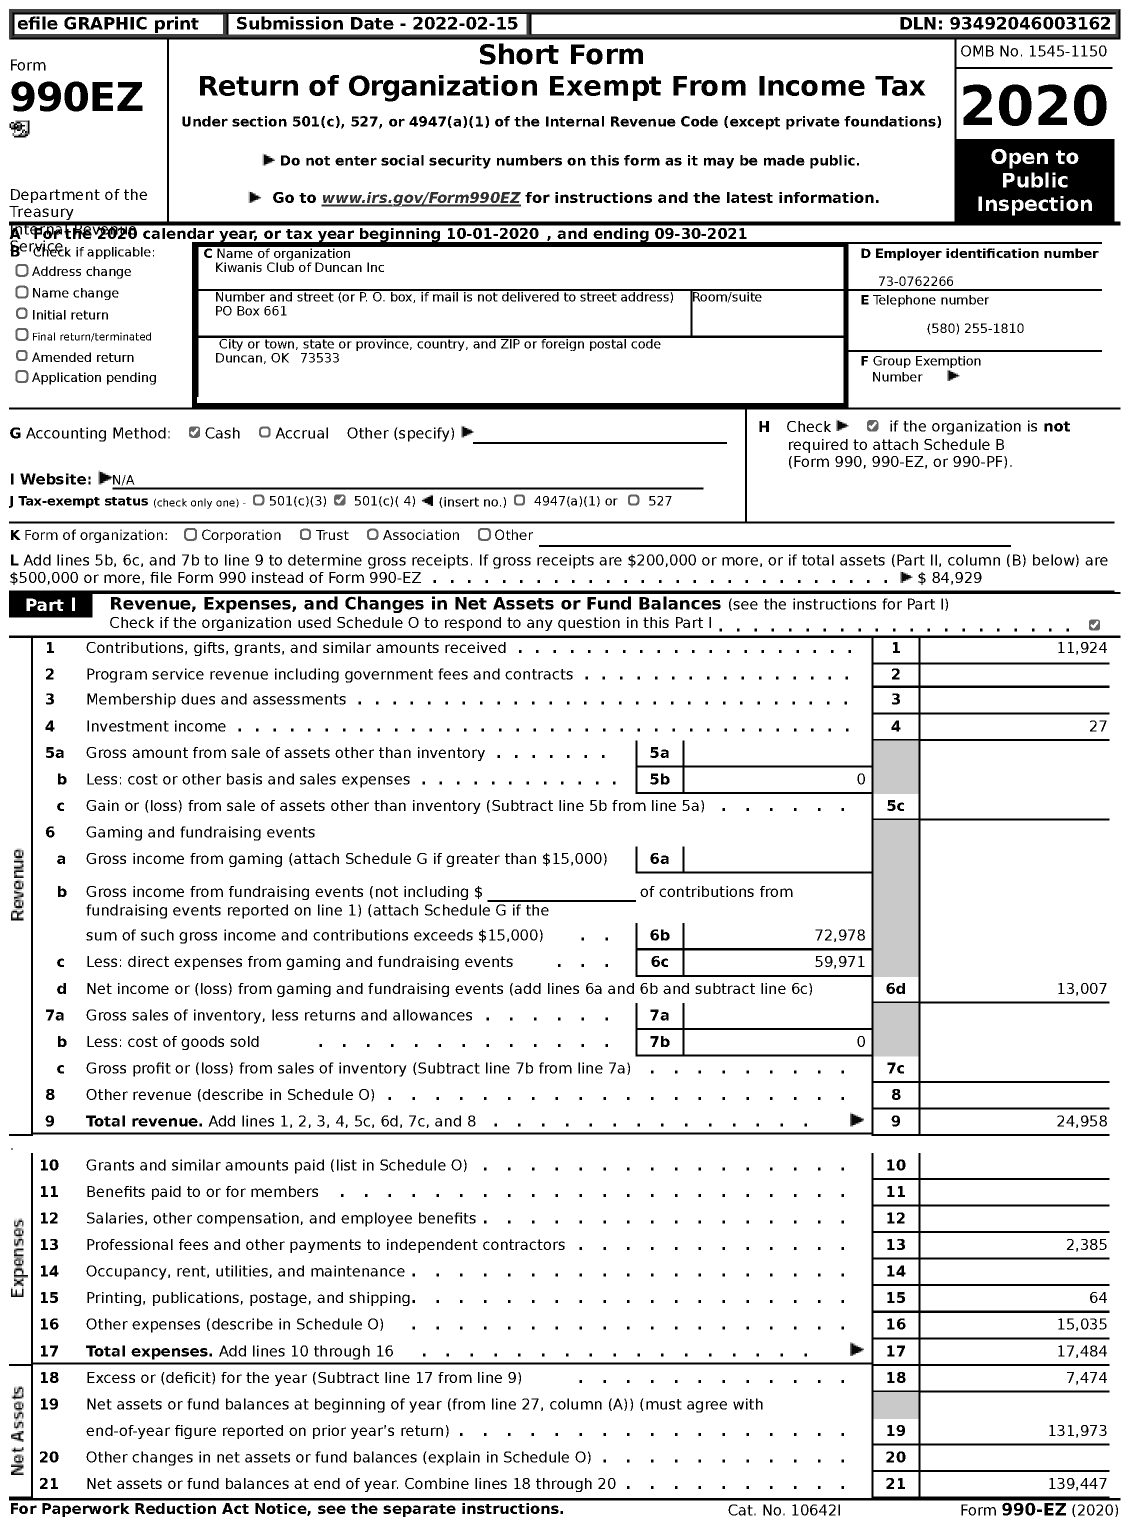 Image of first page of 2020 Form 990EZ for Kiwanis International - K00502 Duncan